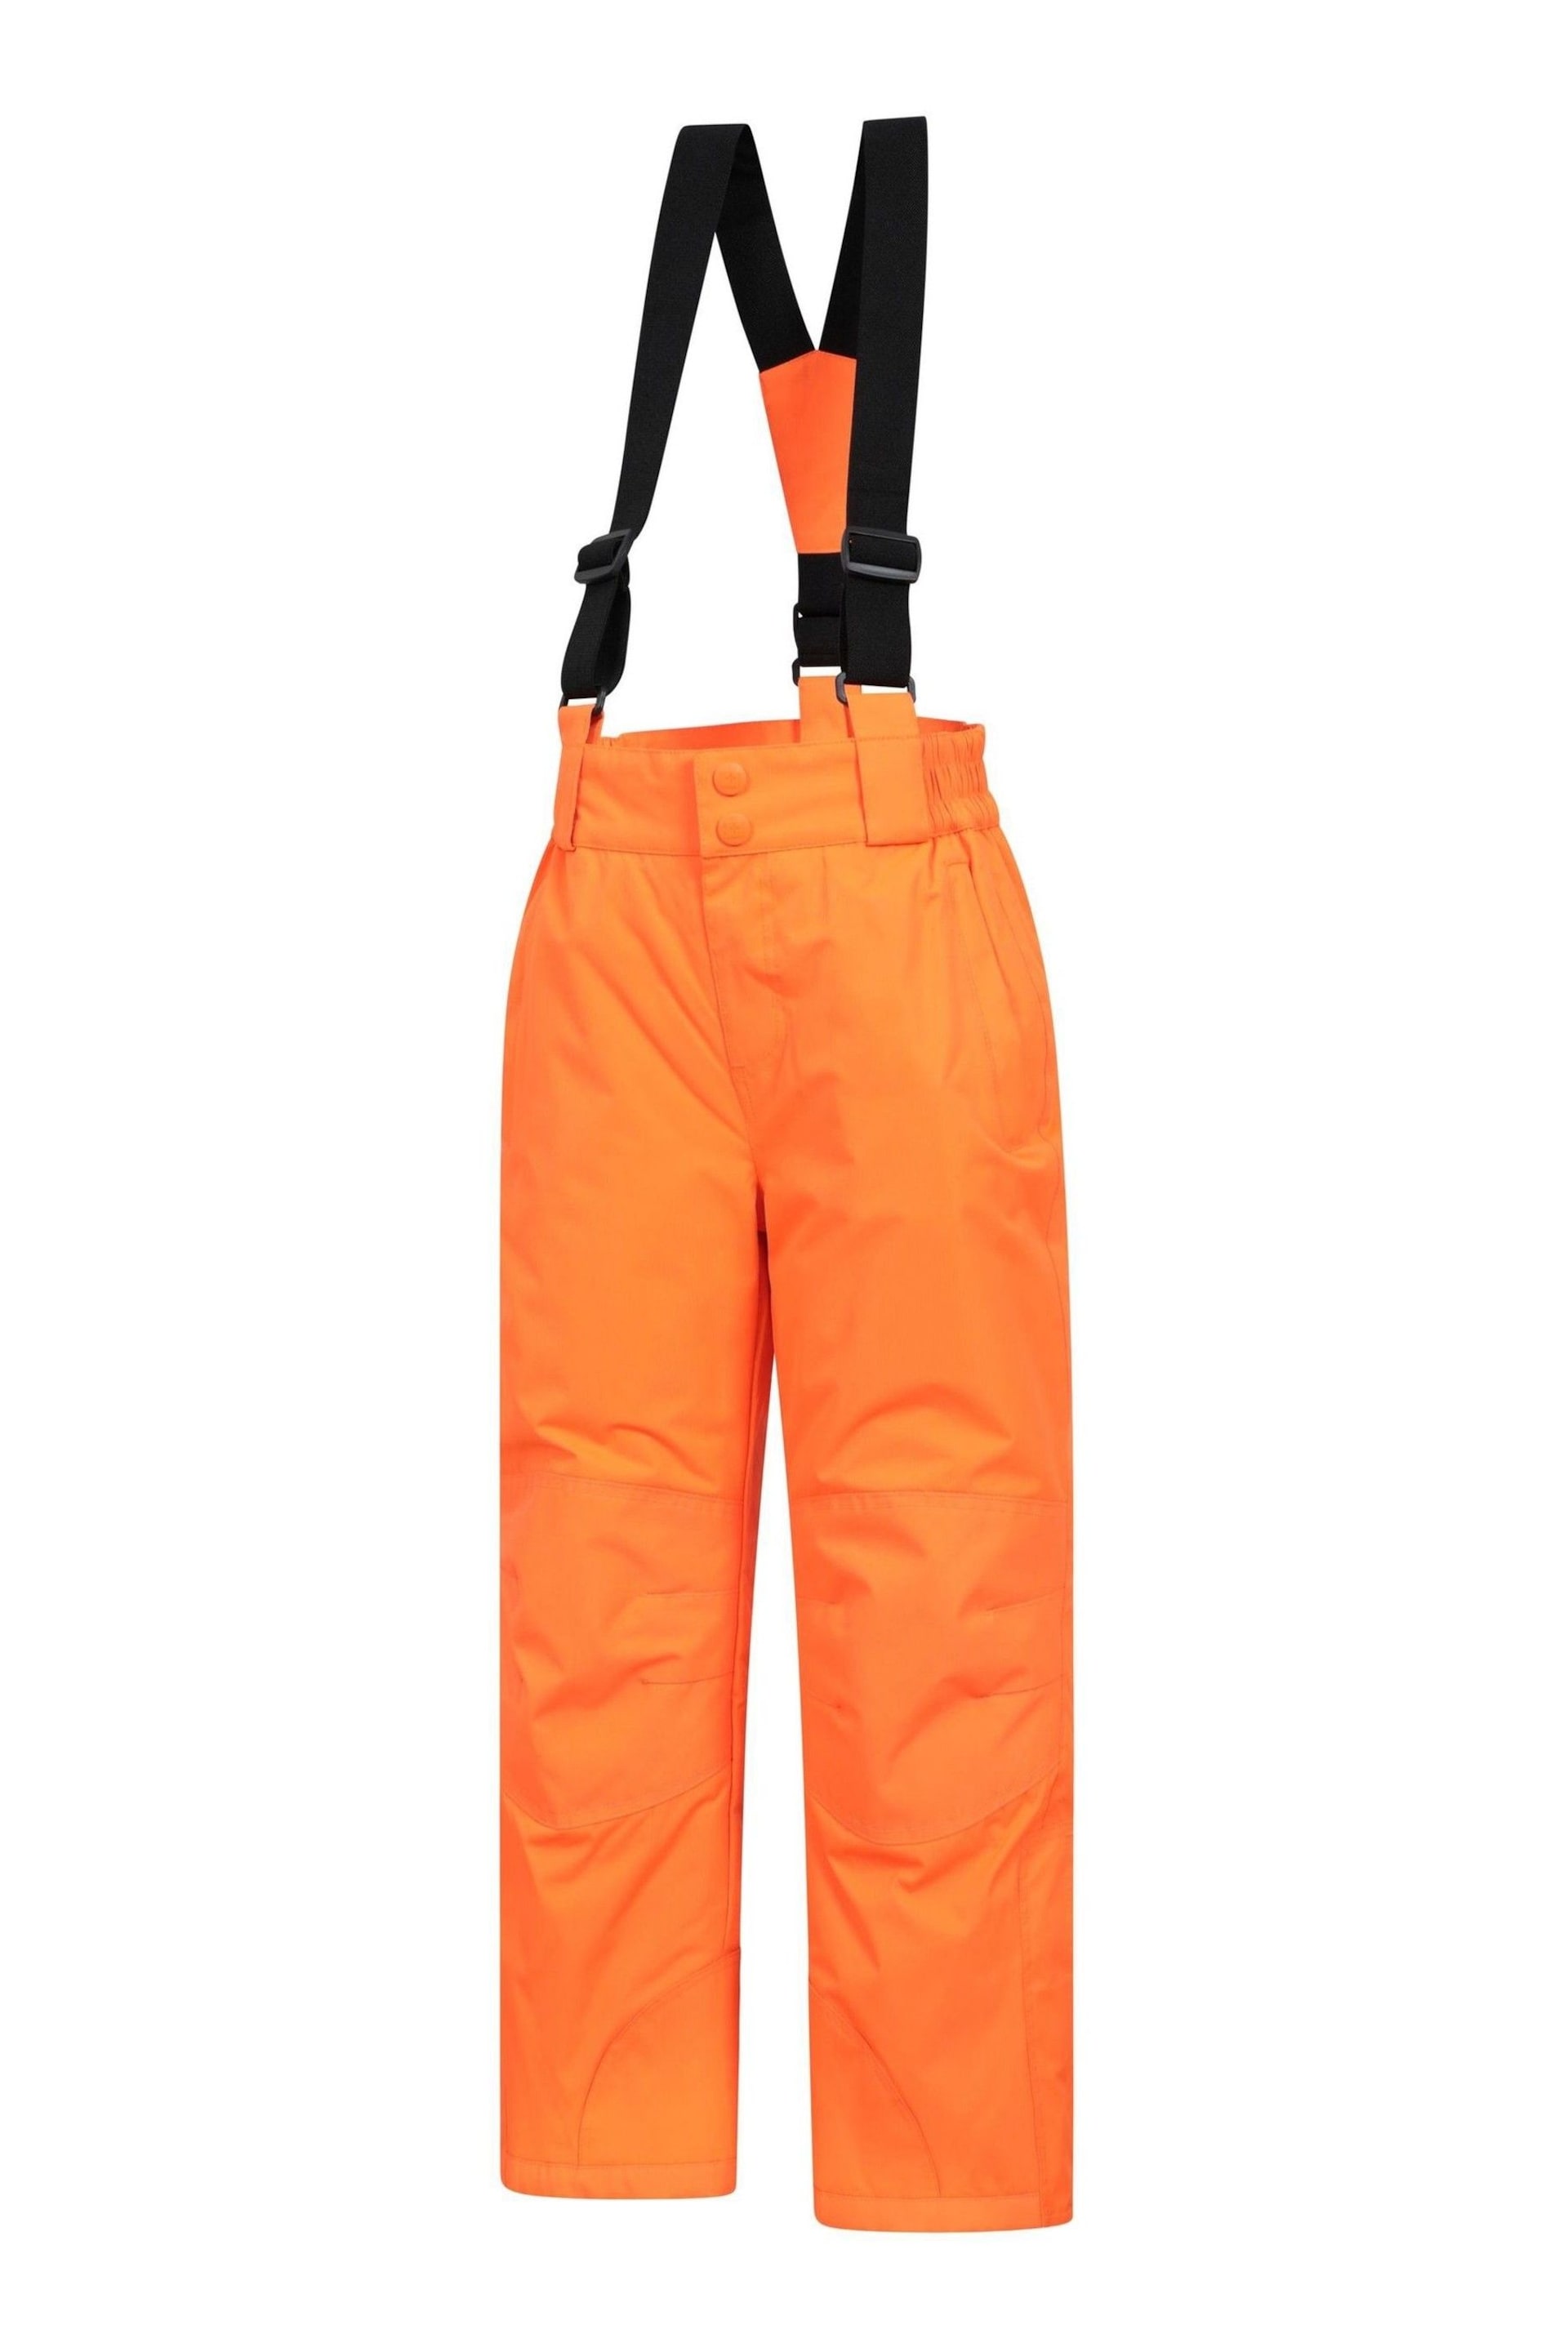 Mountain Warehouse Orange Raptor Snow Kids Trousers - Image 2 of 6